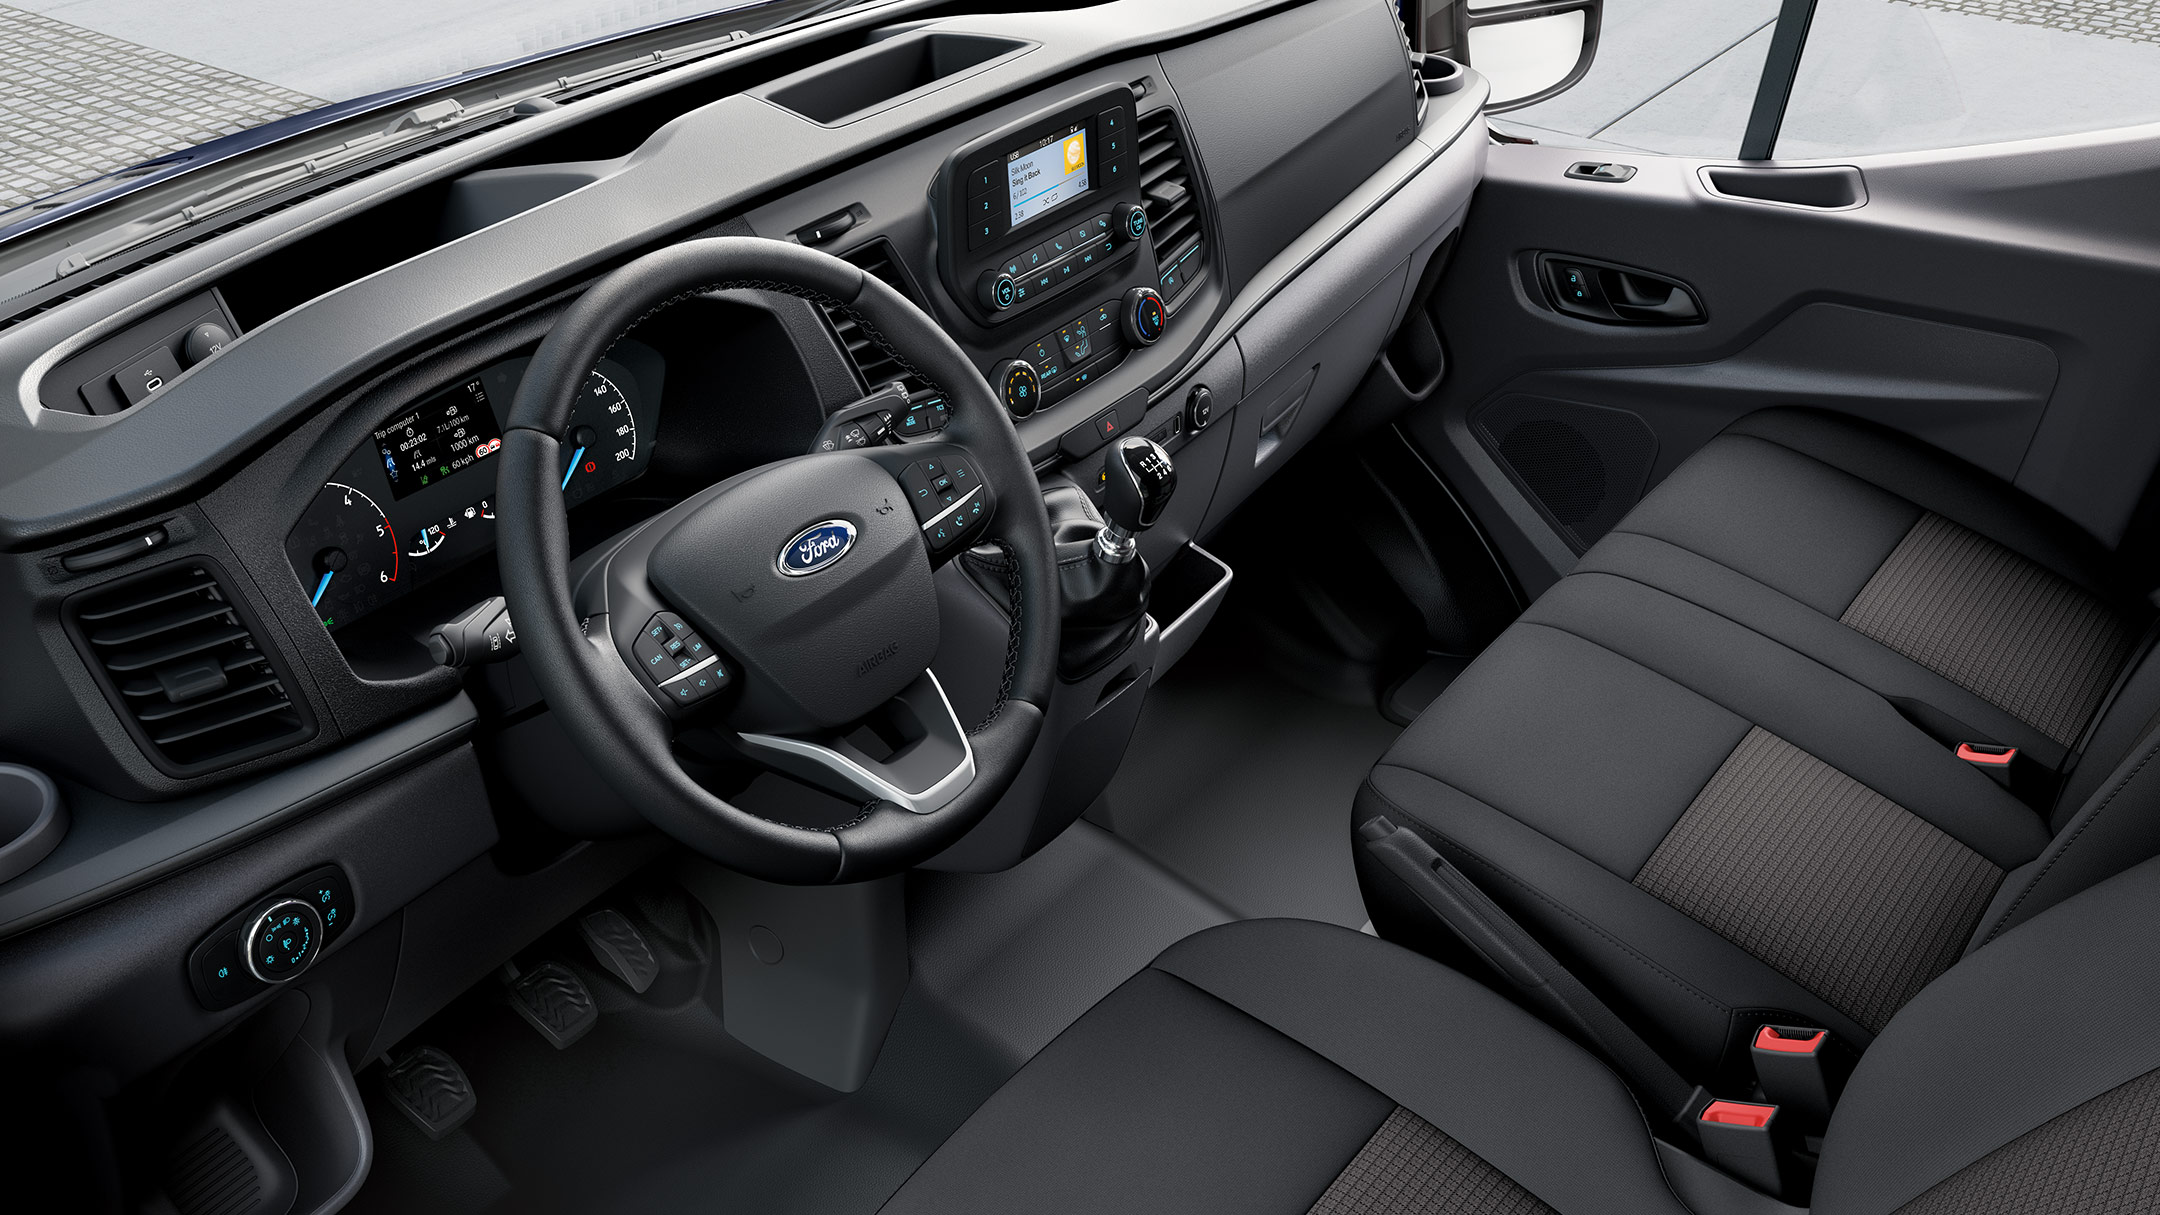 All New Ford Transit Minibus interior cabin view